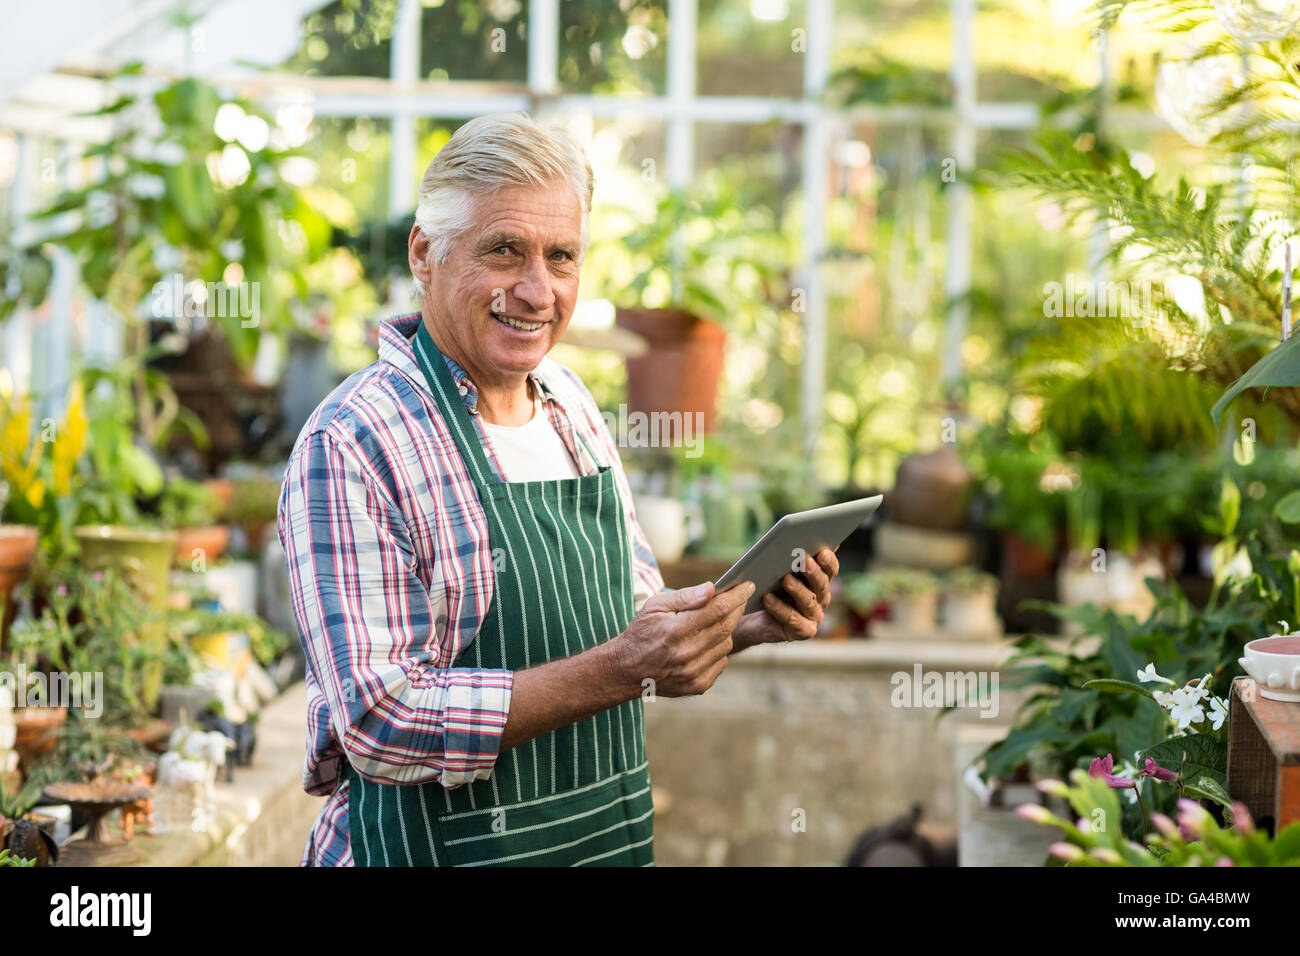 Male gardener smiling while using digital tablet Stock Photo